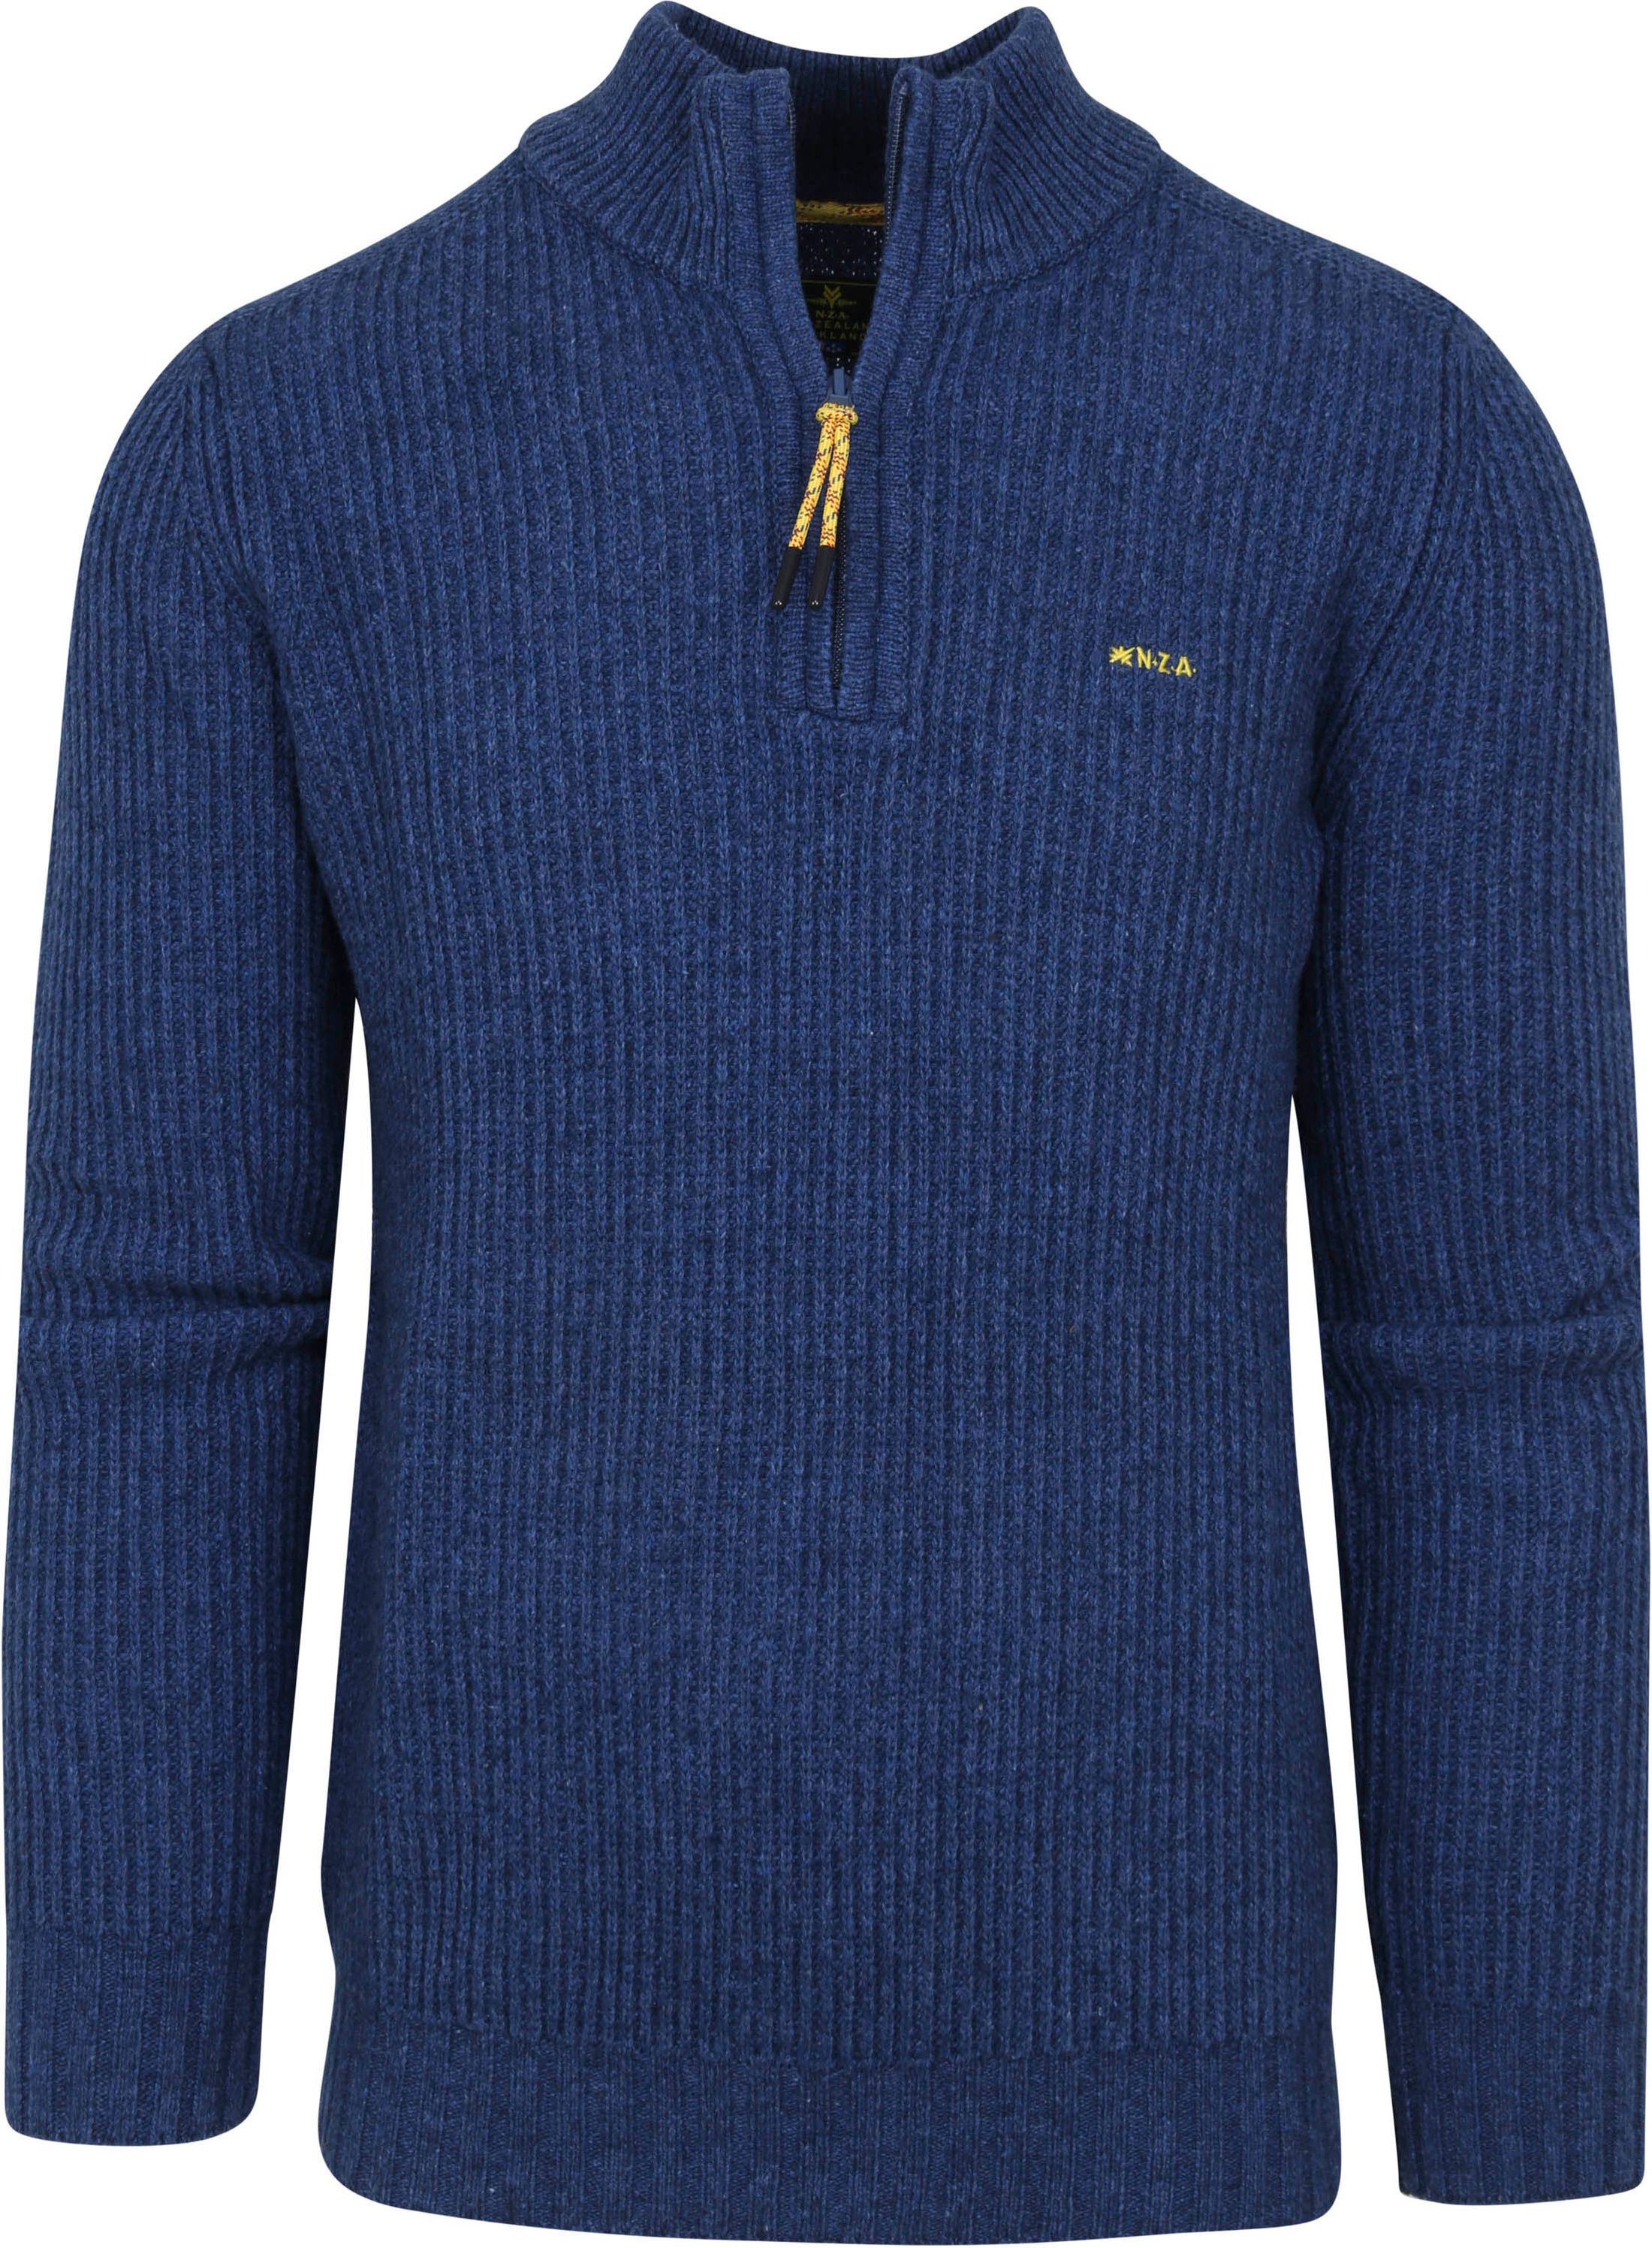 NZA Sweater Wool Mix Dry  Blue size 3XL